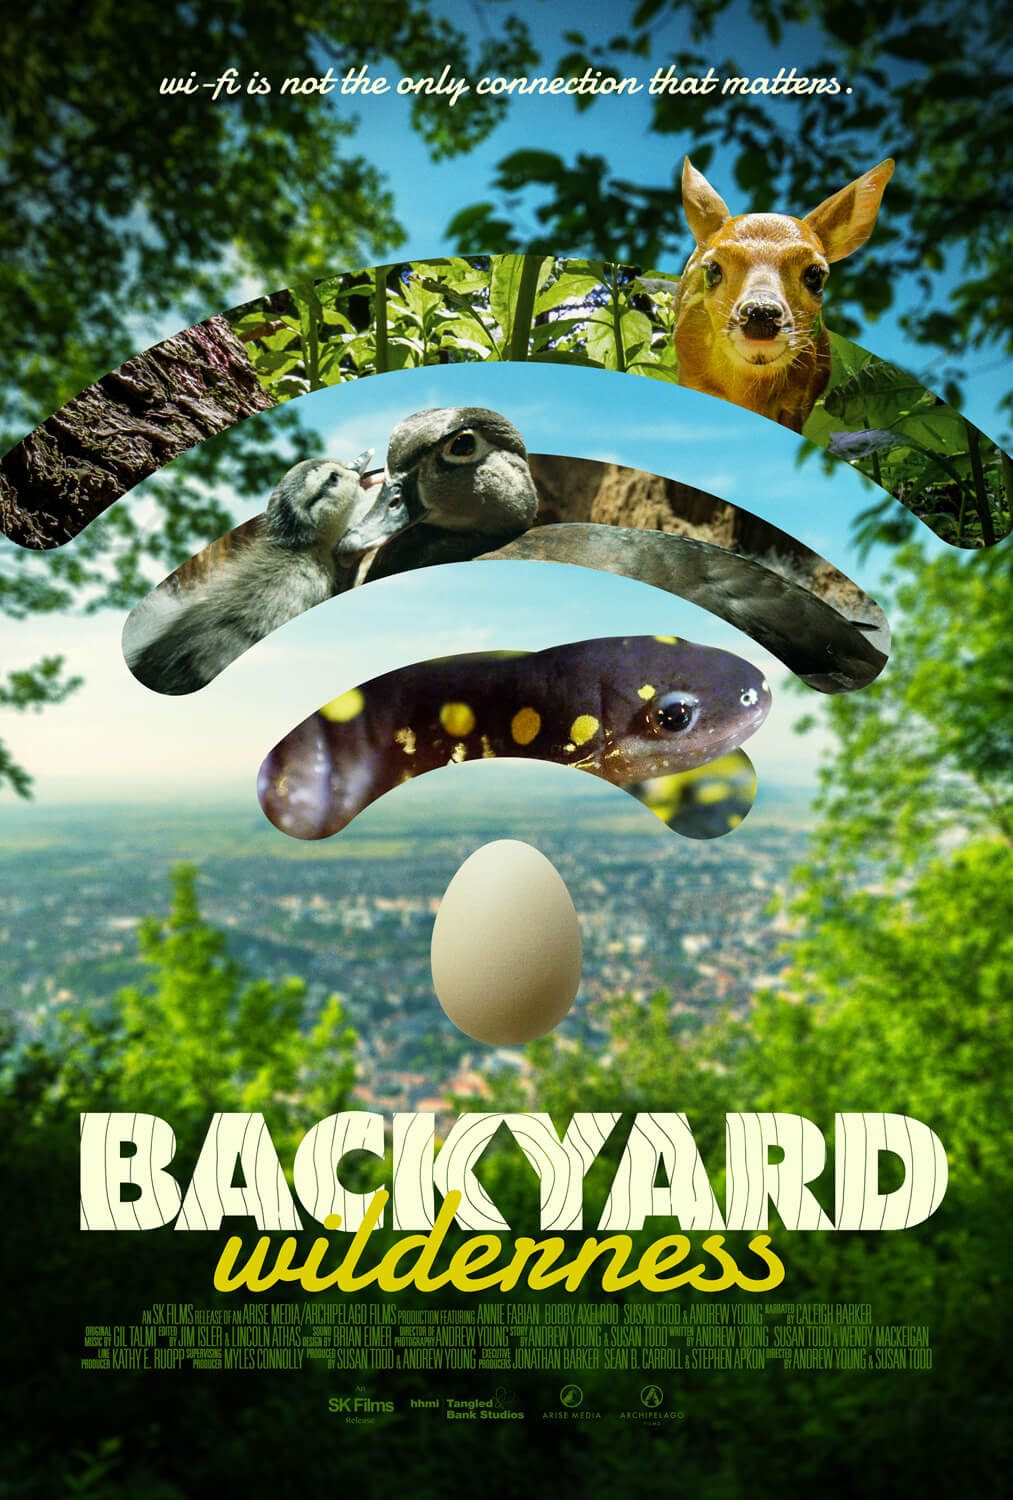 Backyard Wilderness Movie Poster